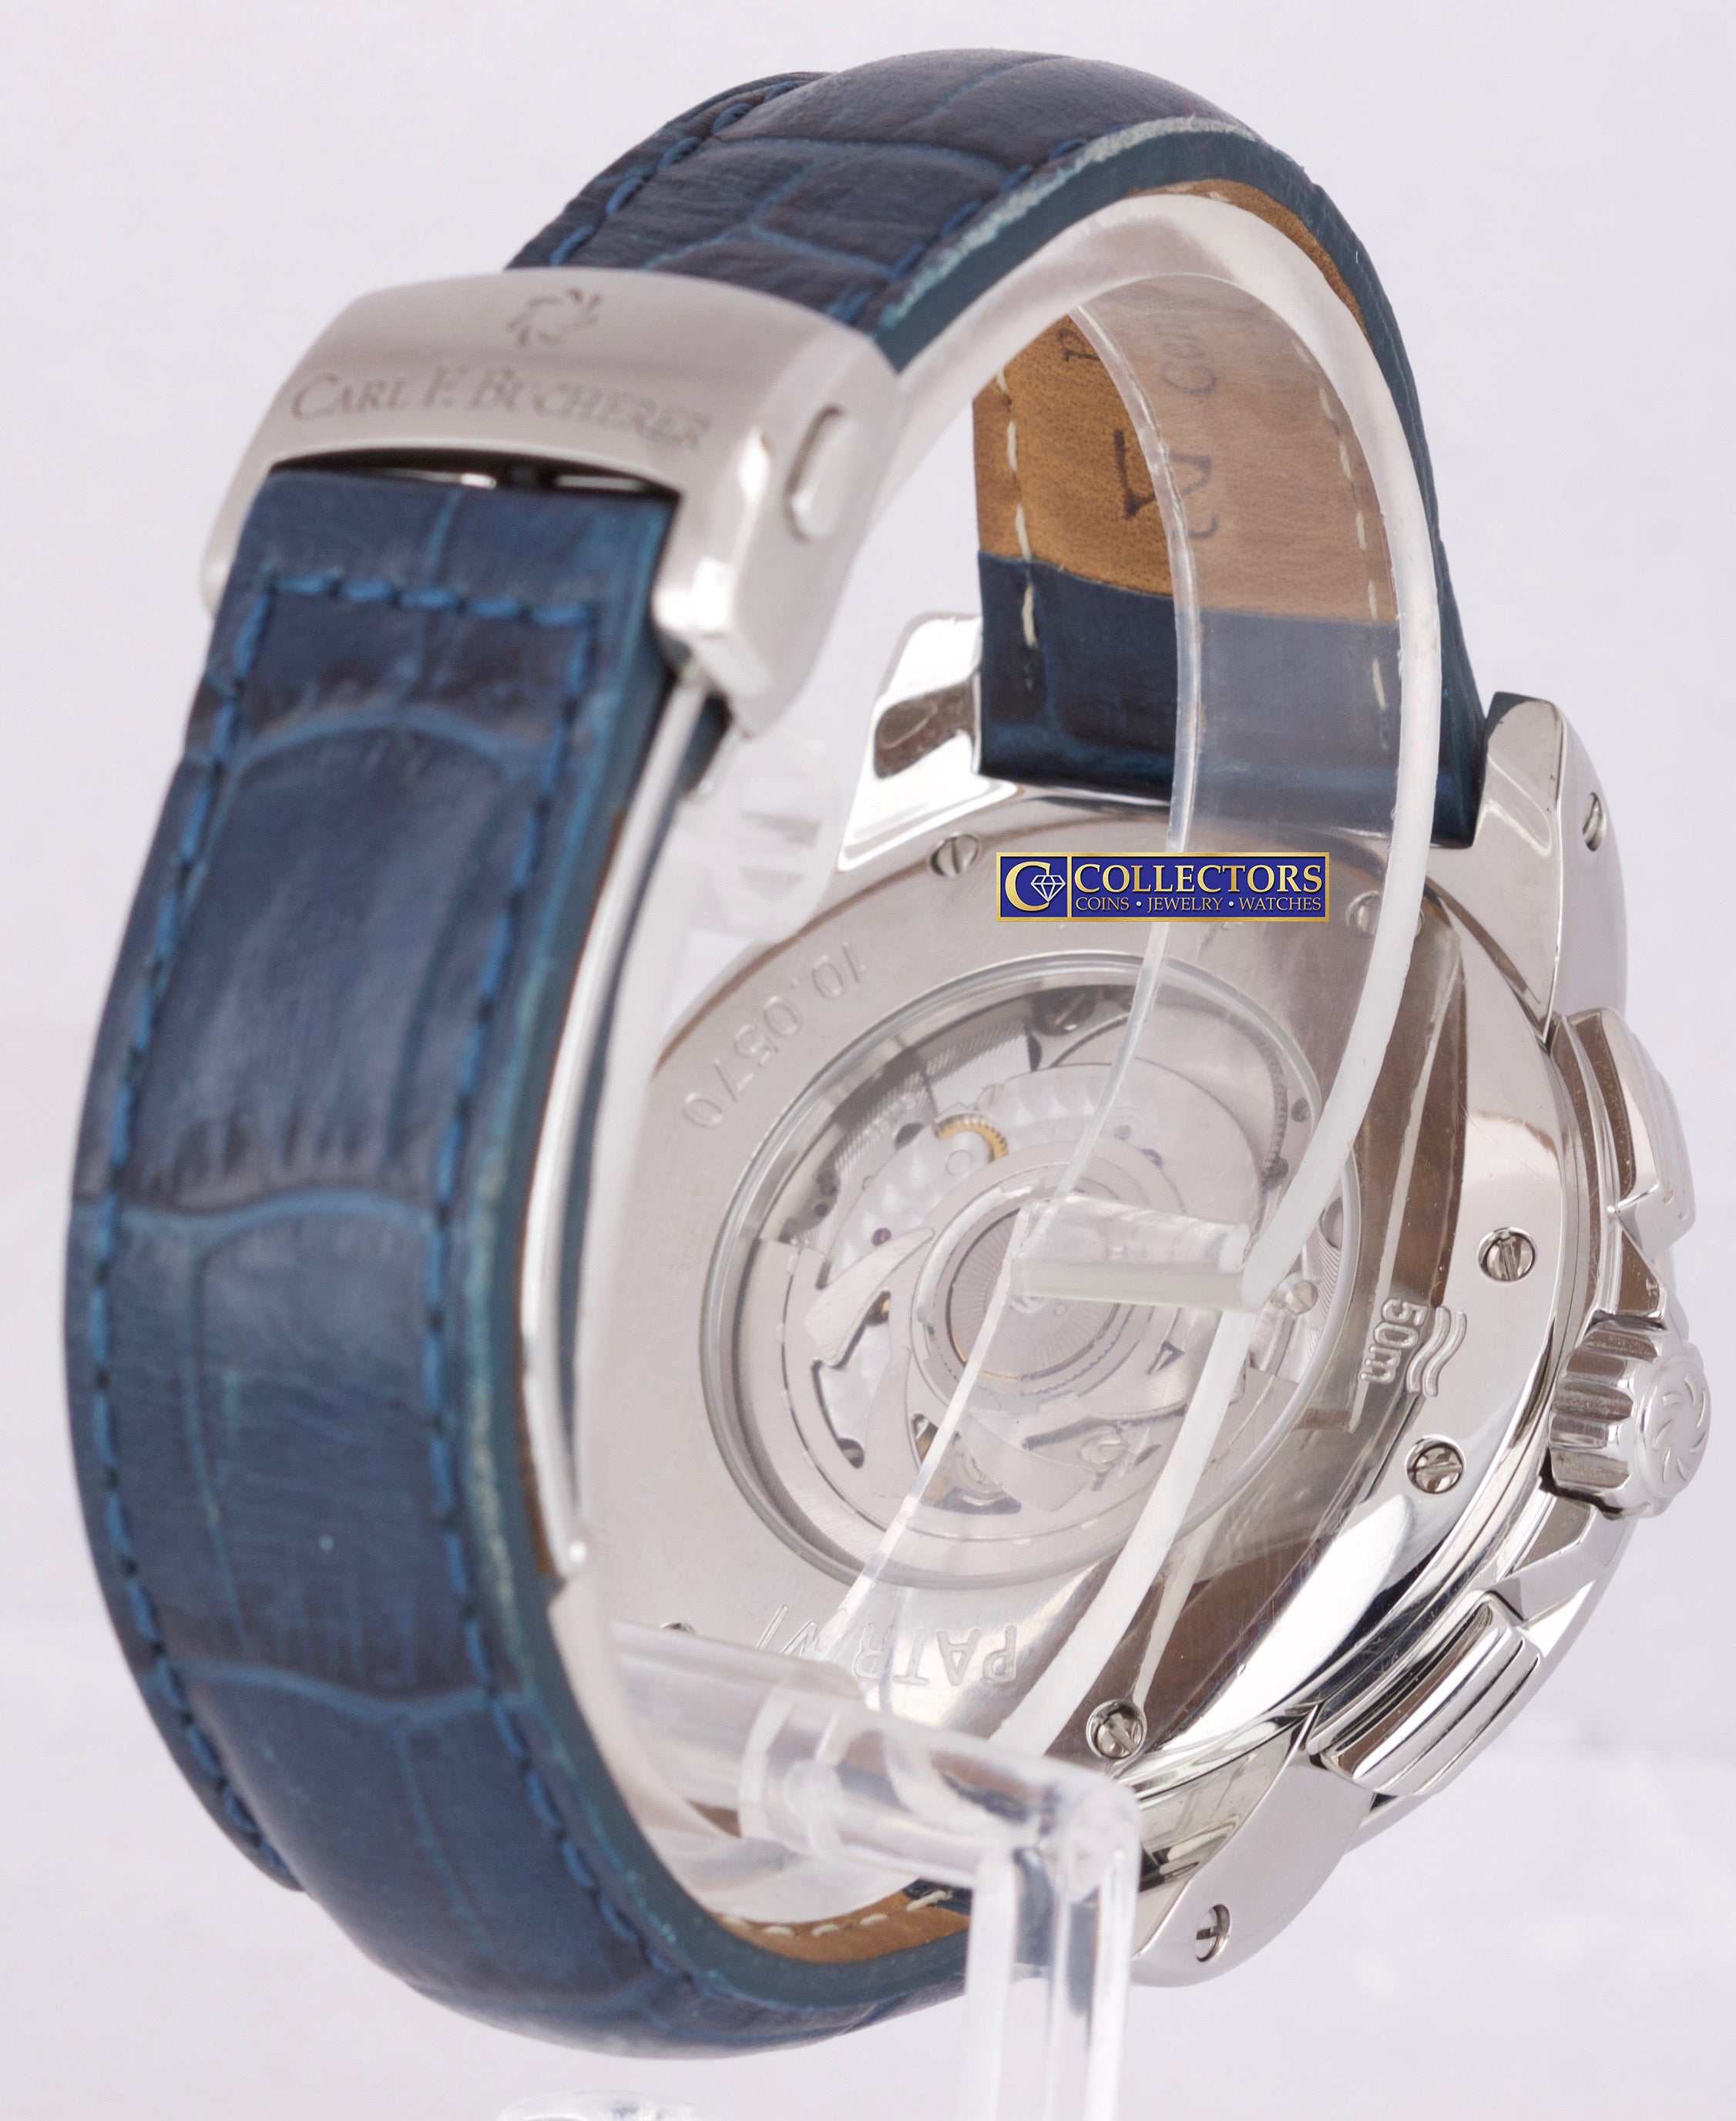 Carl F. Bucherer Patravi Chronograph GMT Blue 42.5mm Stainless Watch 10618.08